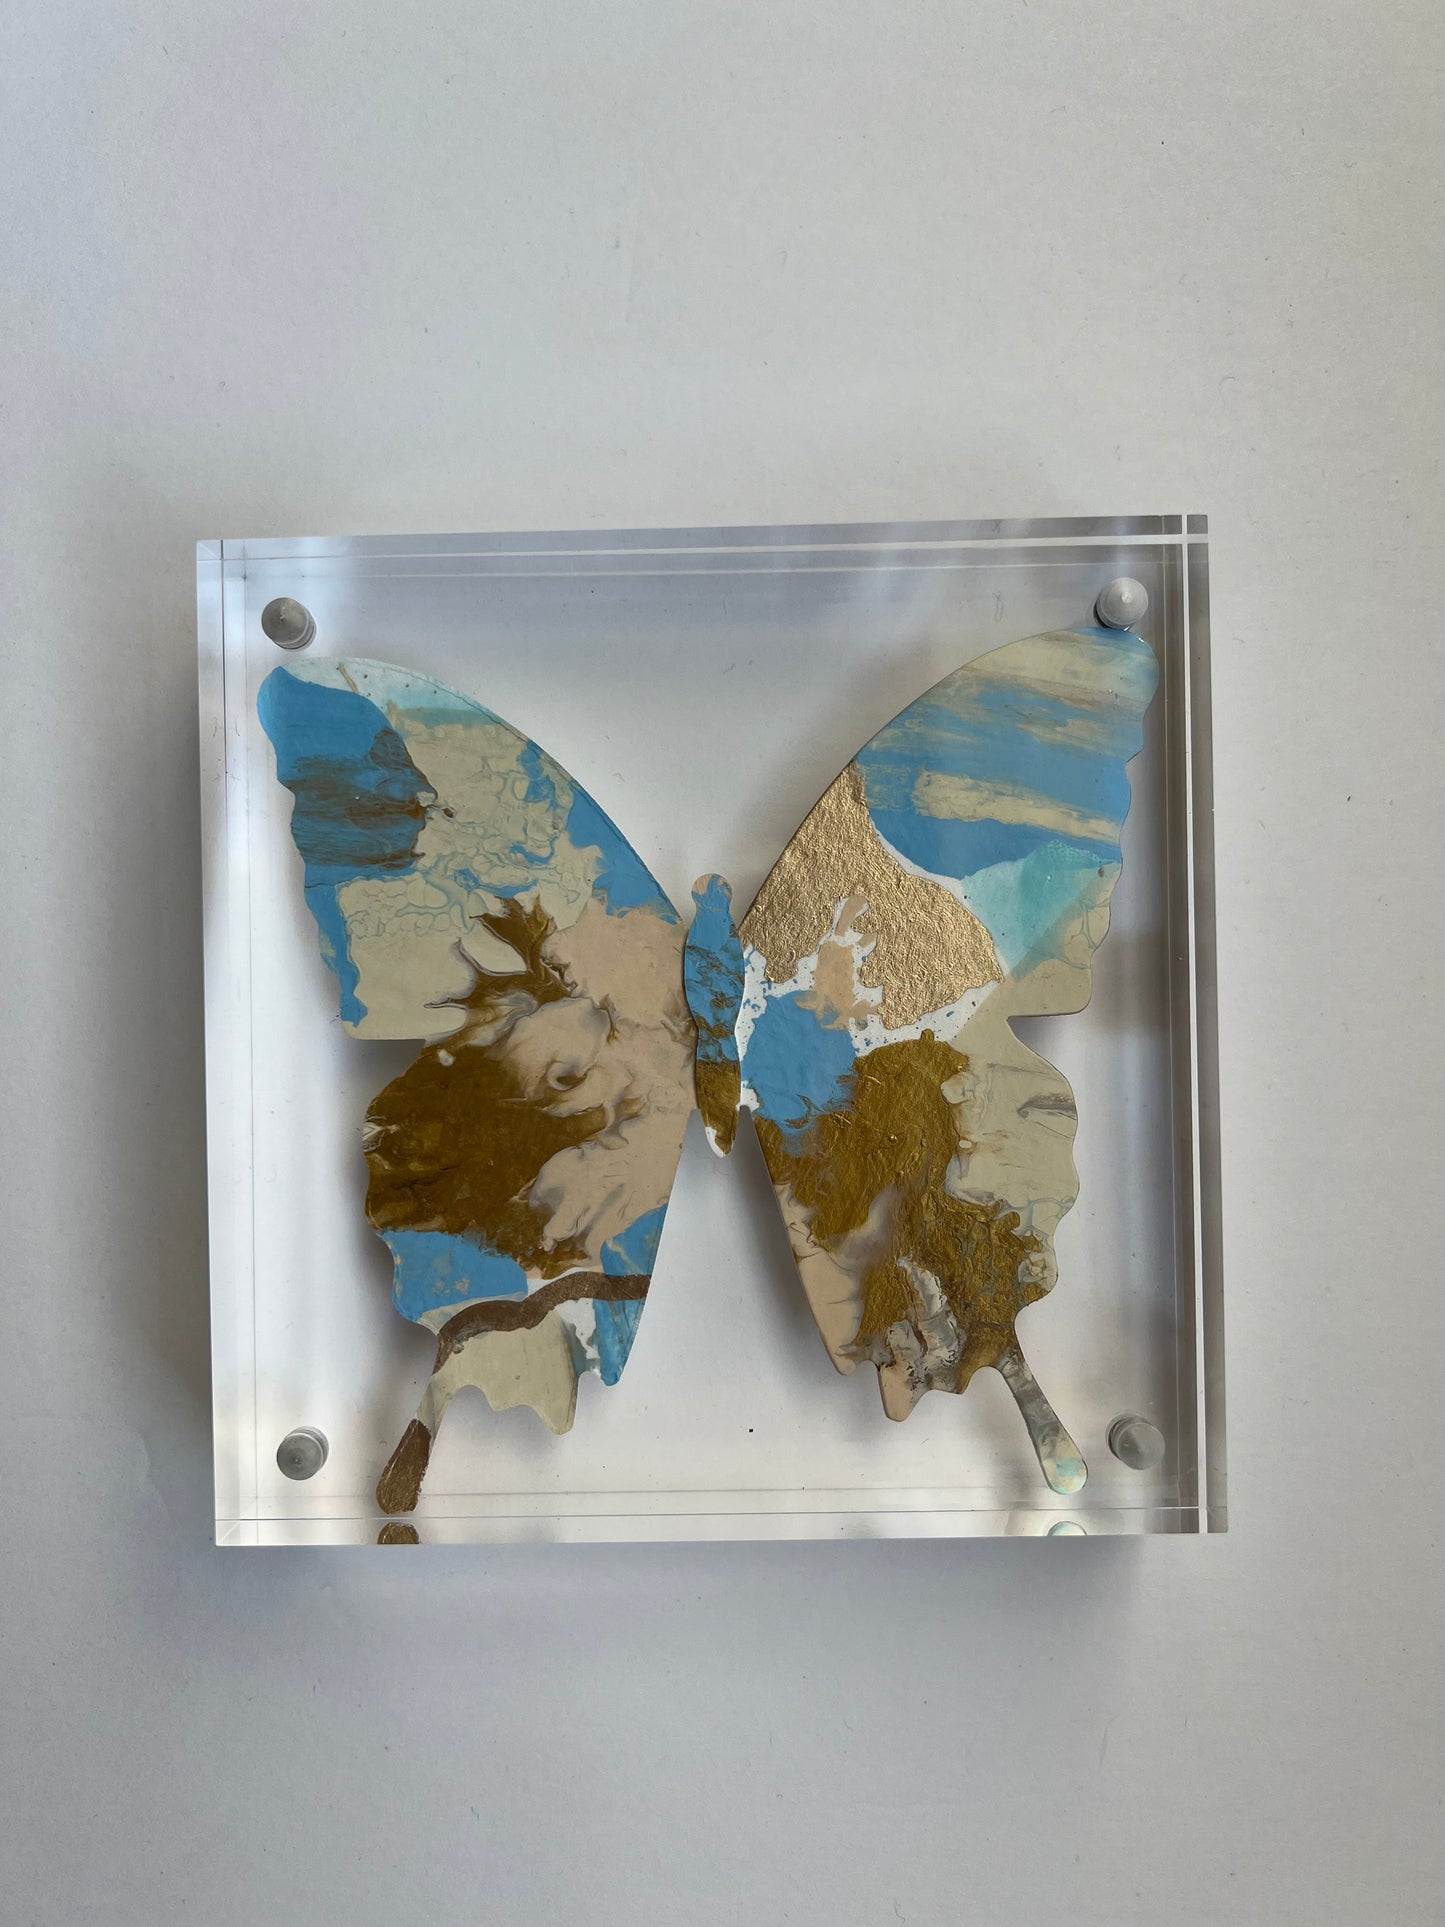 5" x 5" Acrylic Butterfly